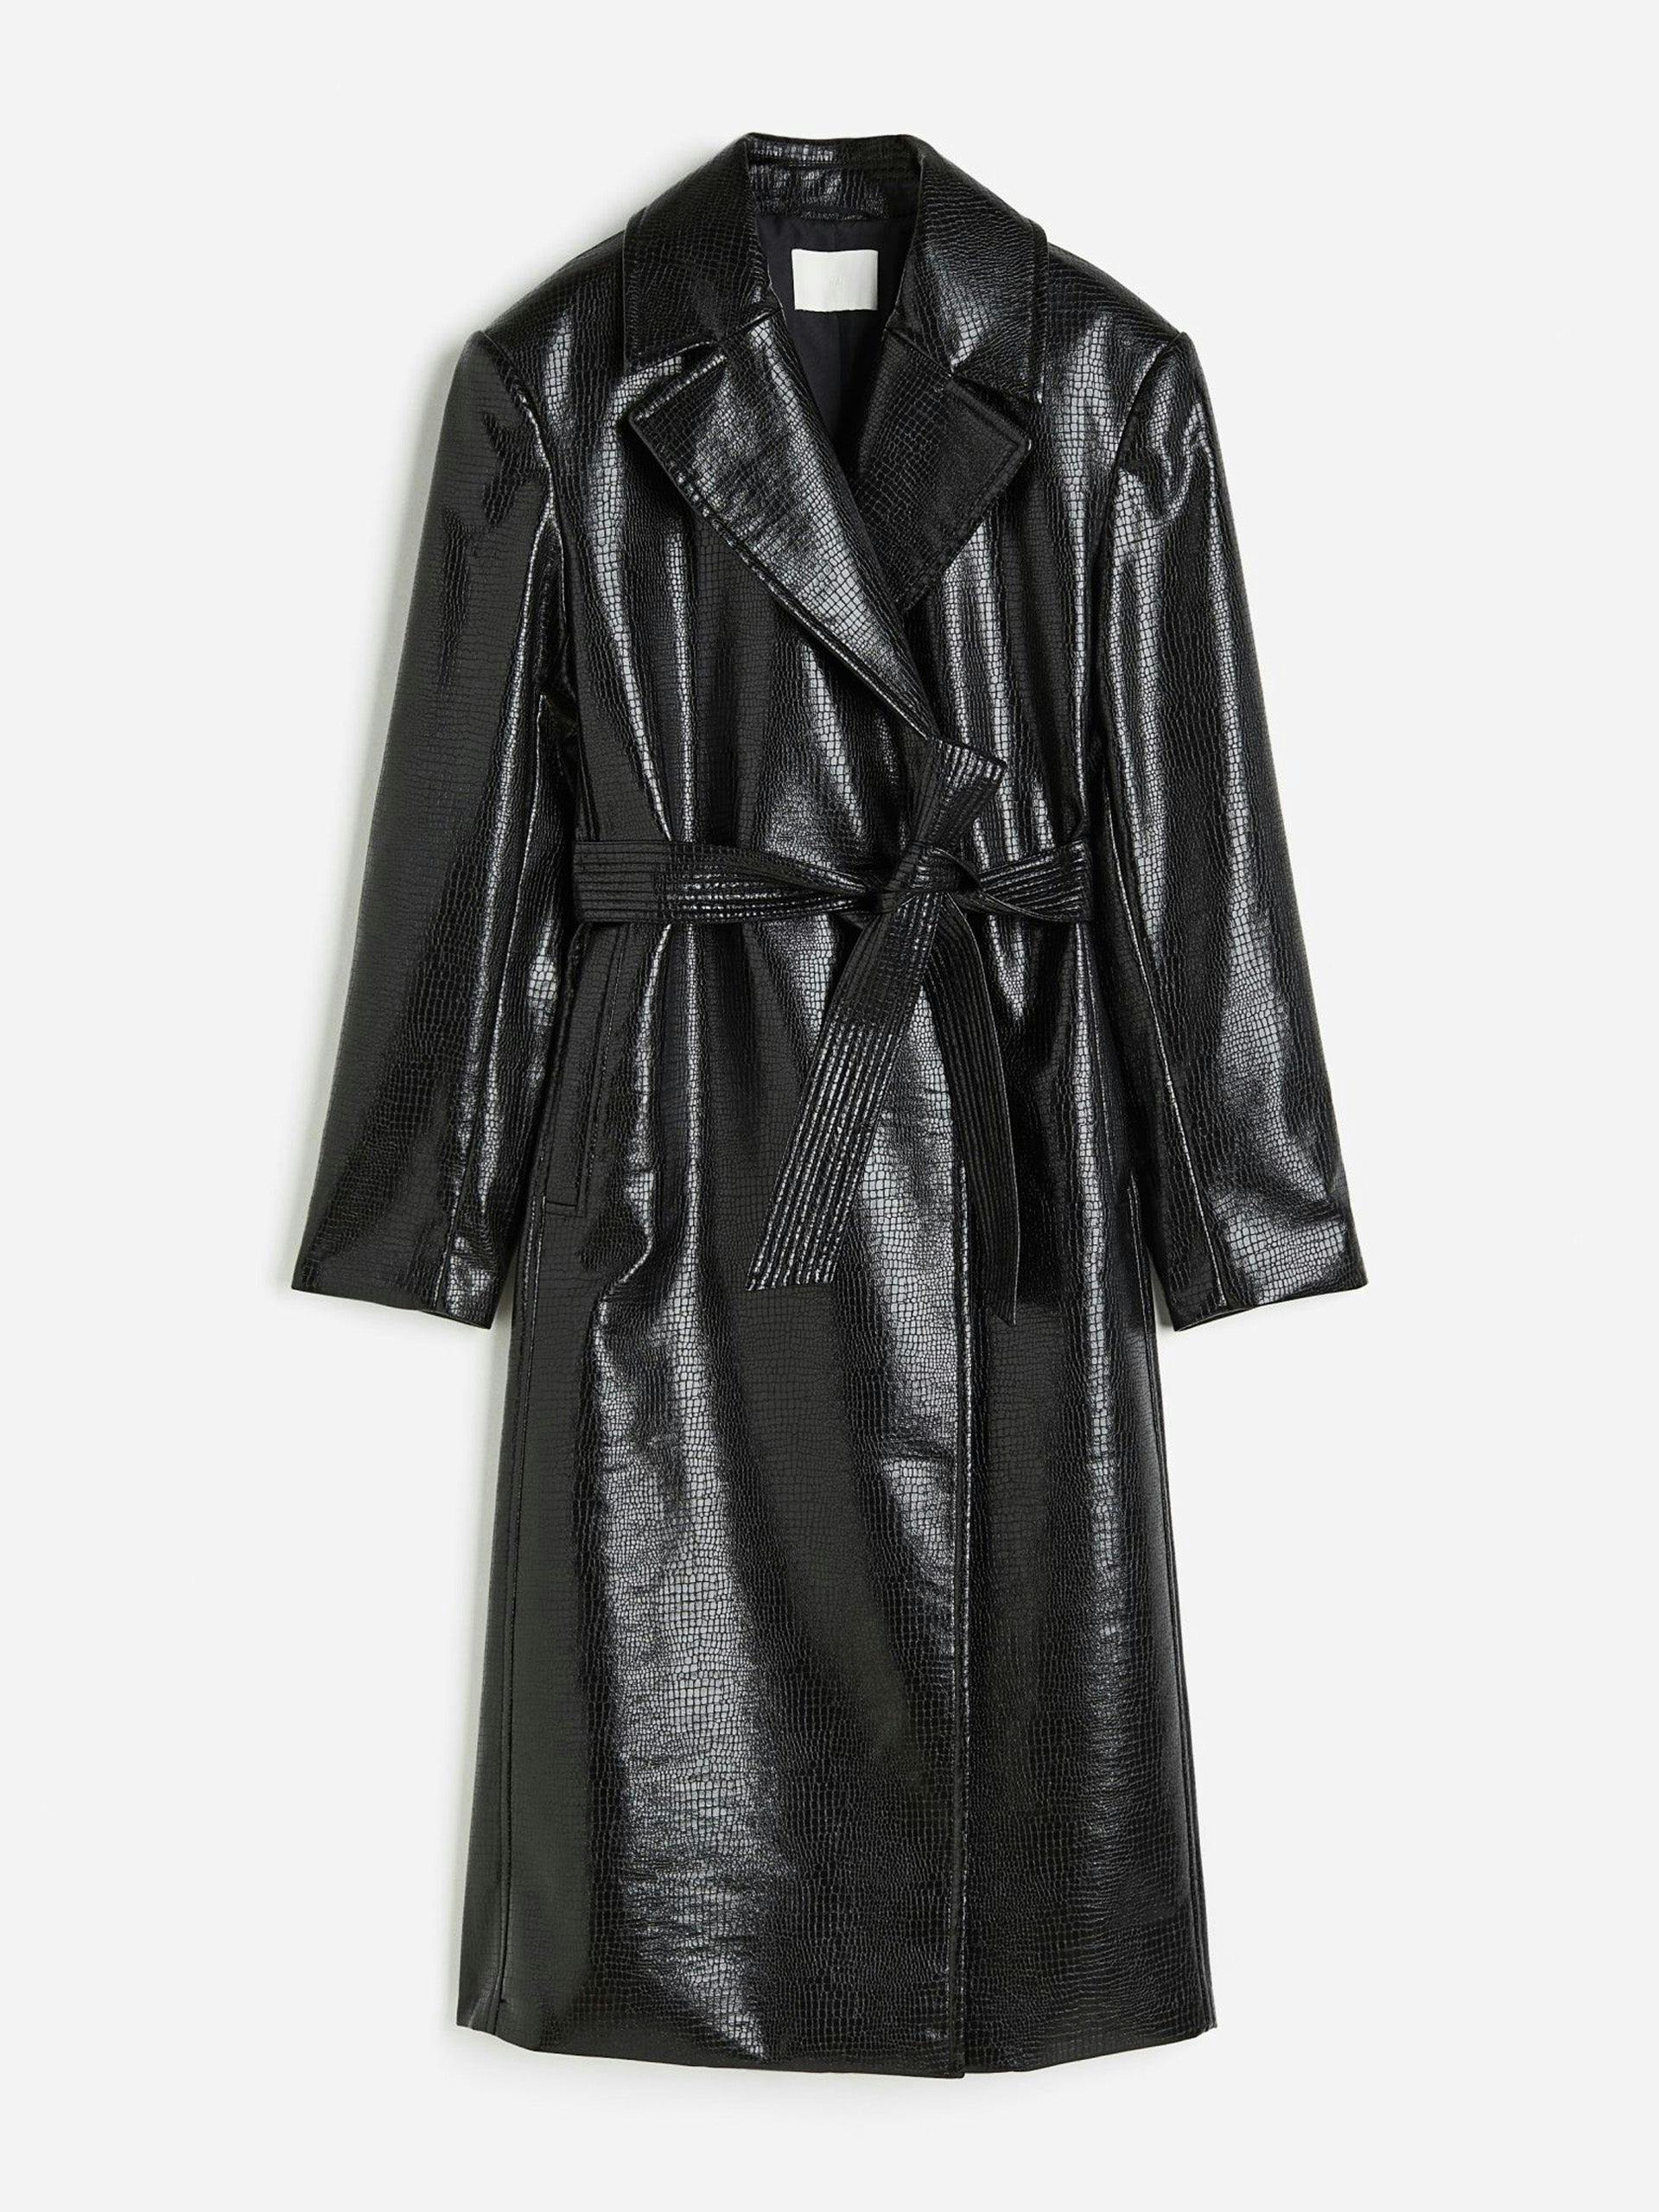 Black coated trench coat